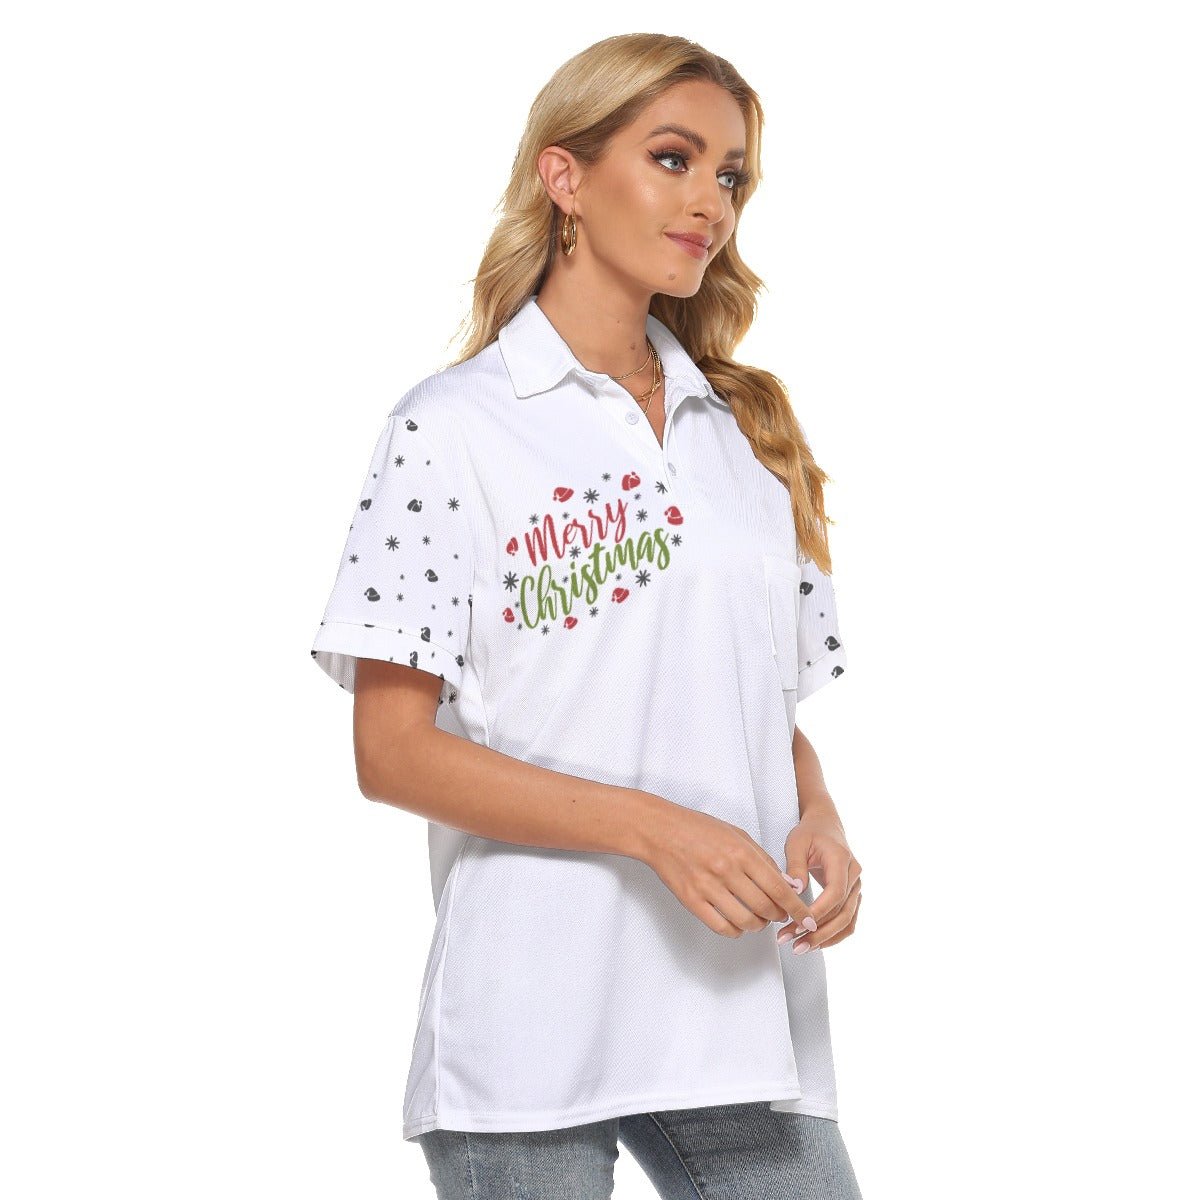 Women's Christmas Polo T-Shirt - Merry Christmas - Festive Style